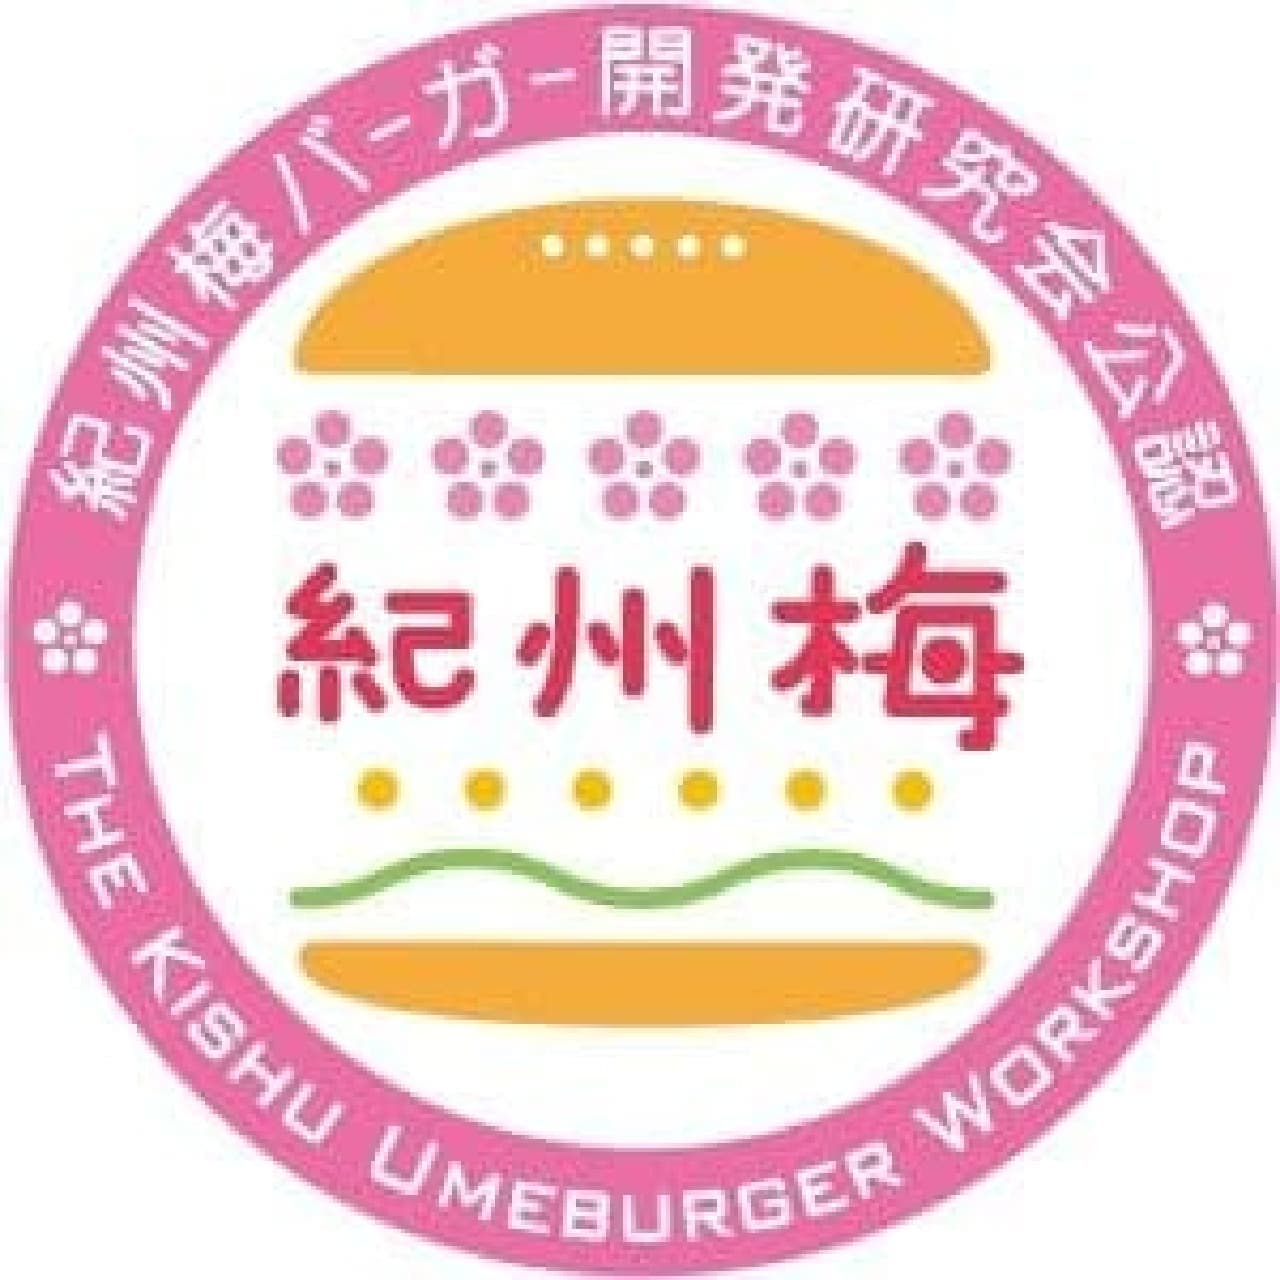 Kishu Ume Burger Development Study Group